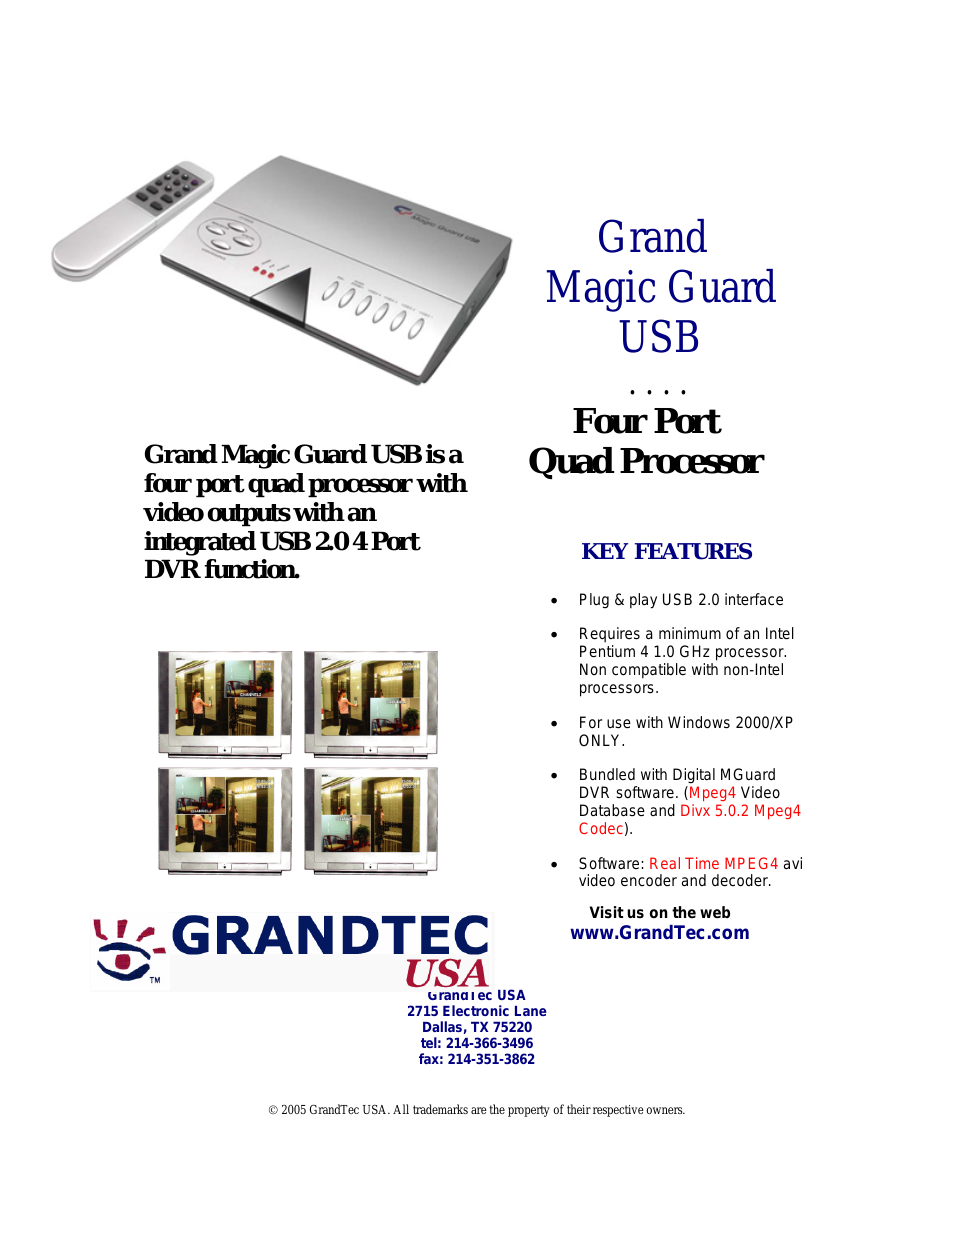 Grand Magic Guard USB